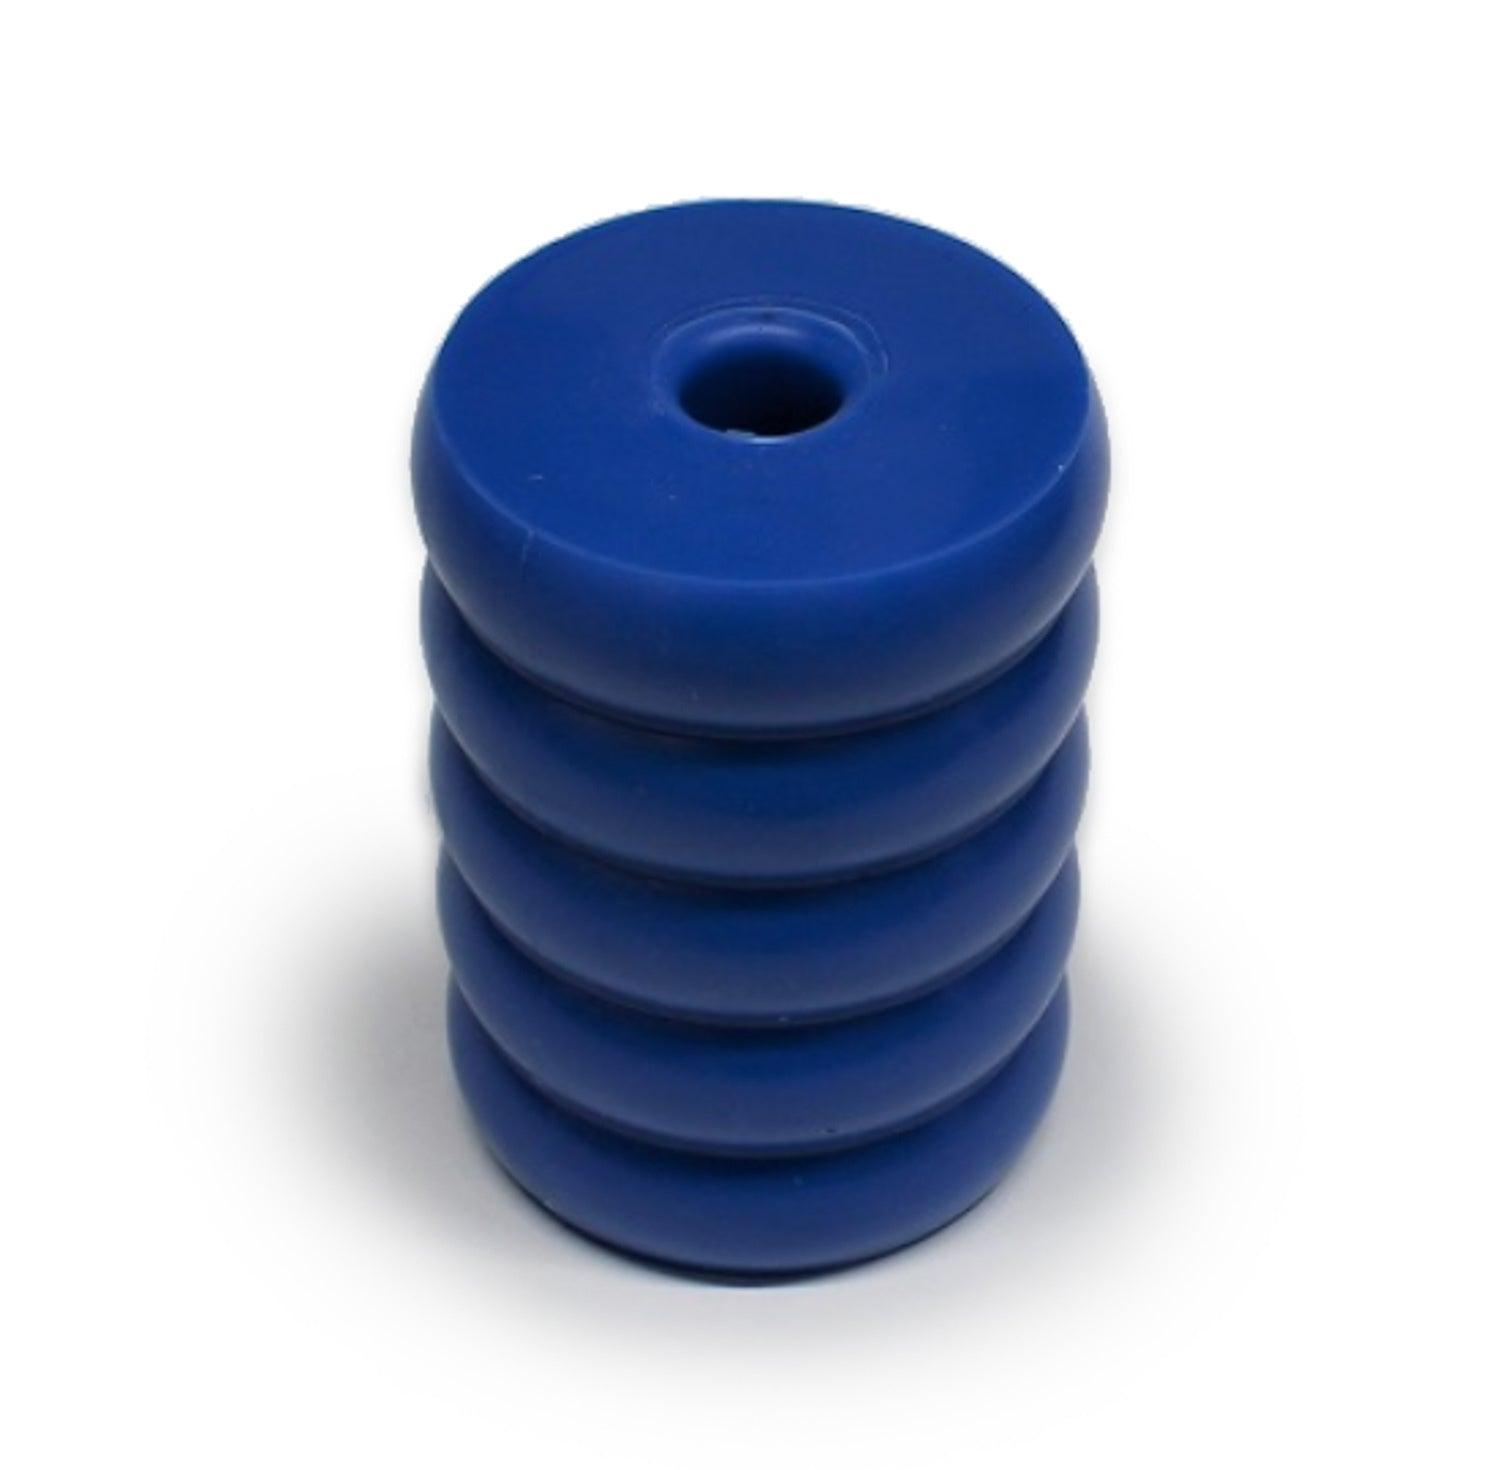 Bushing Pull-Bar Blue 3-60 / 2-80 Duromter - Burlile Performance Products